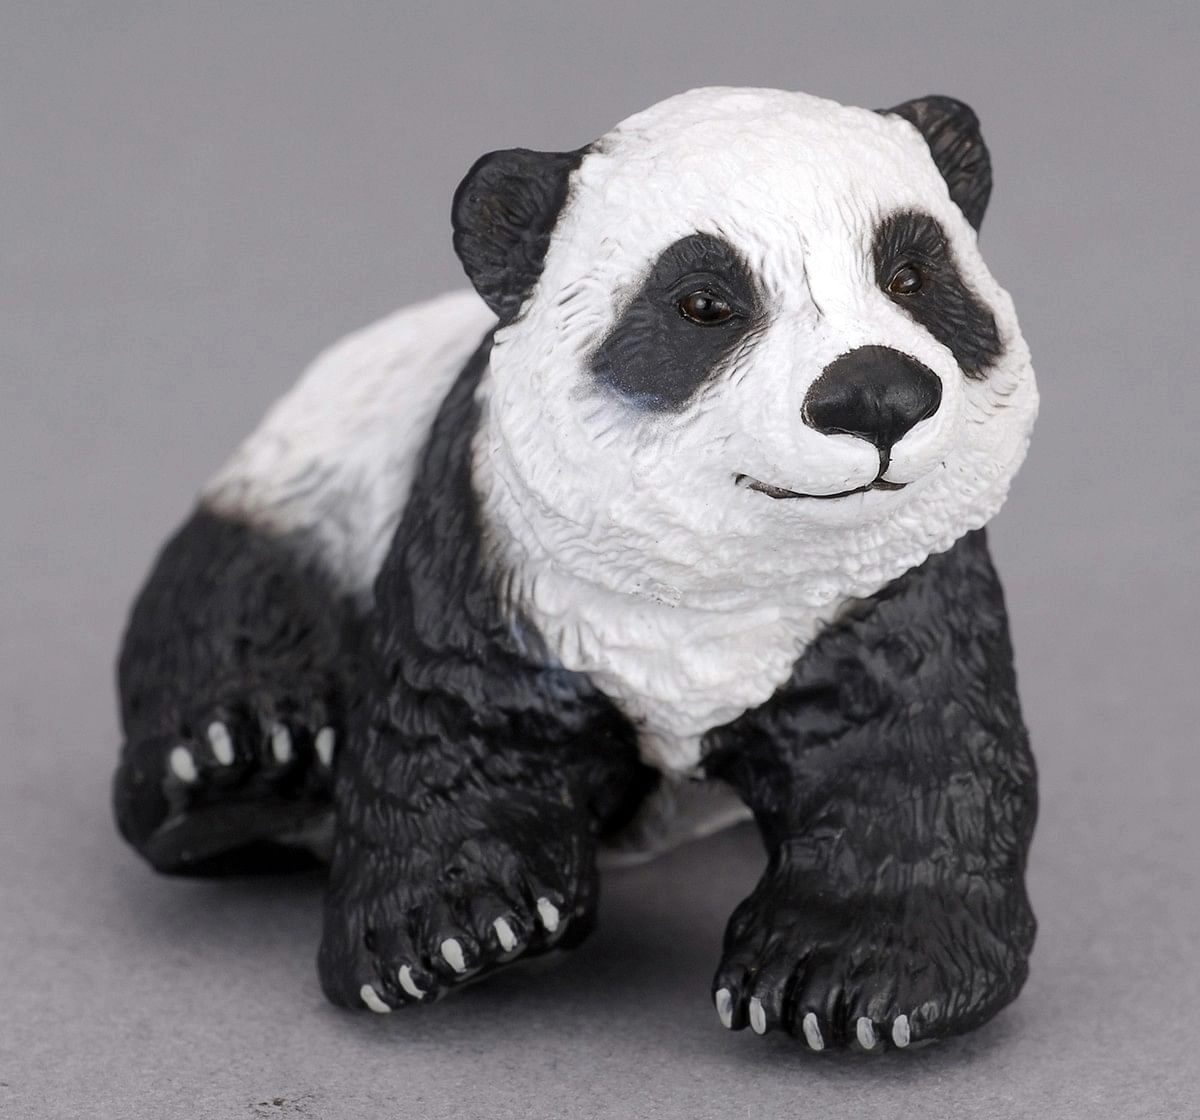 Collecta -Giant Panda Cub animal figure Sitting, 3Y+